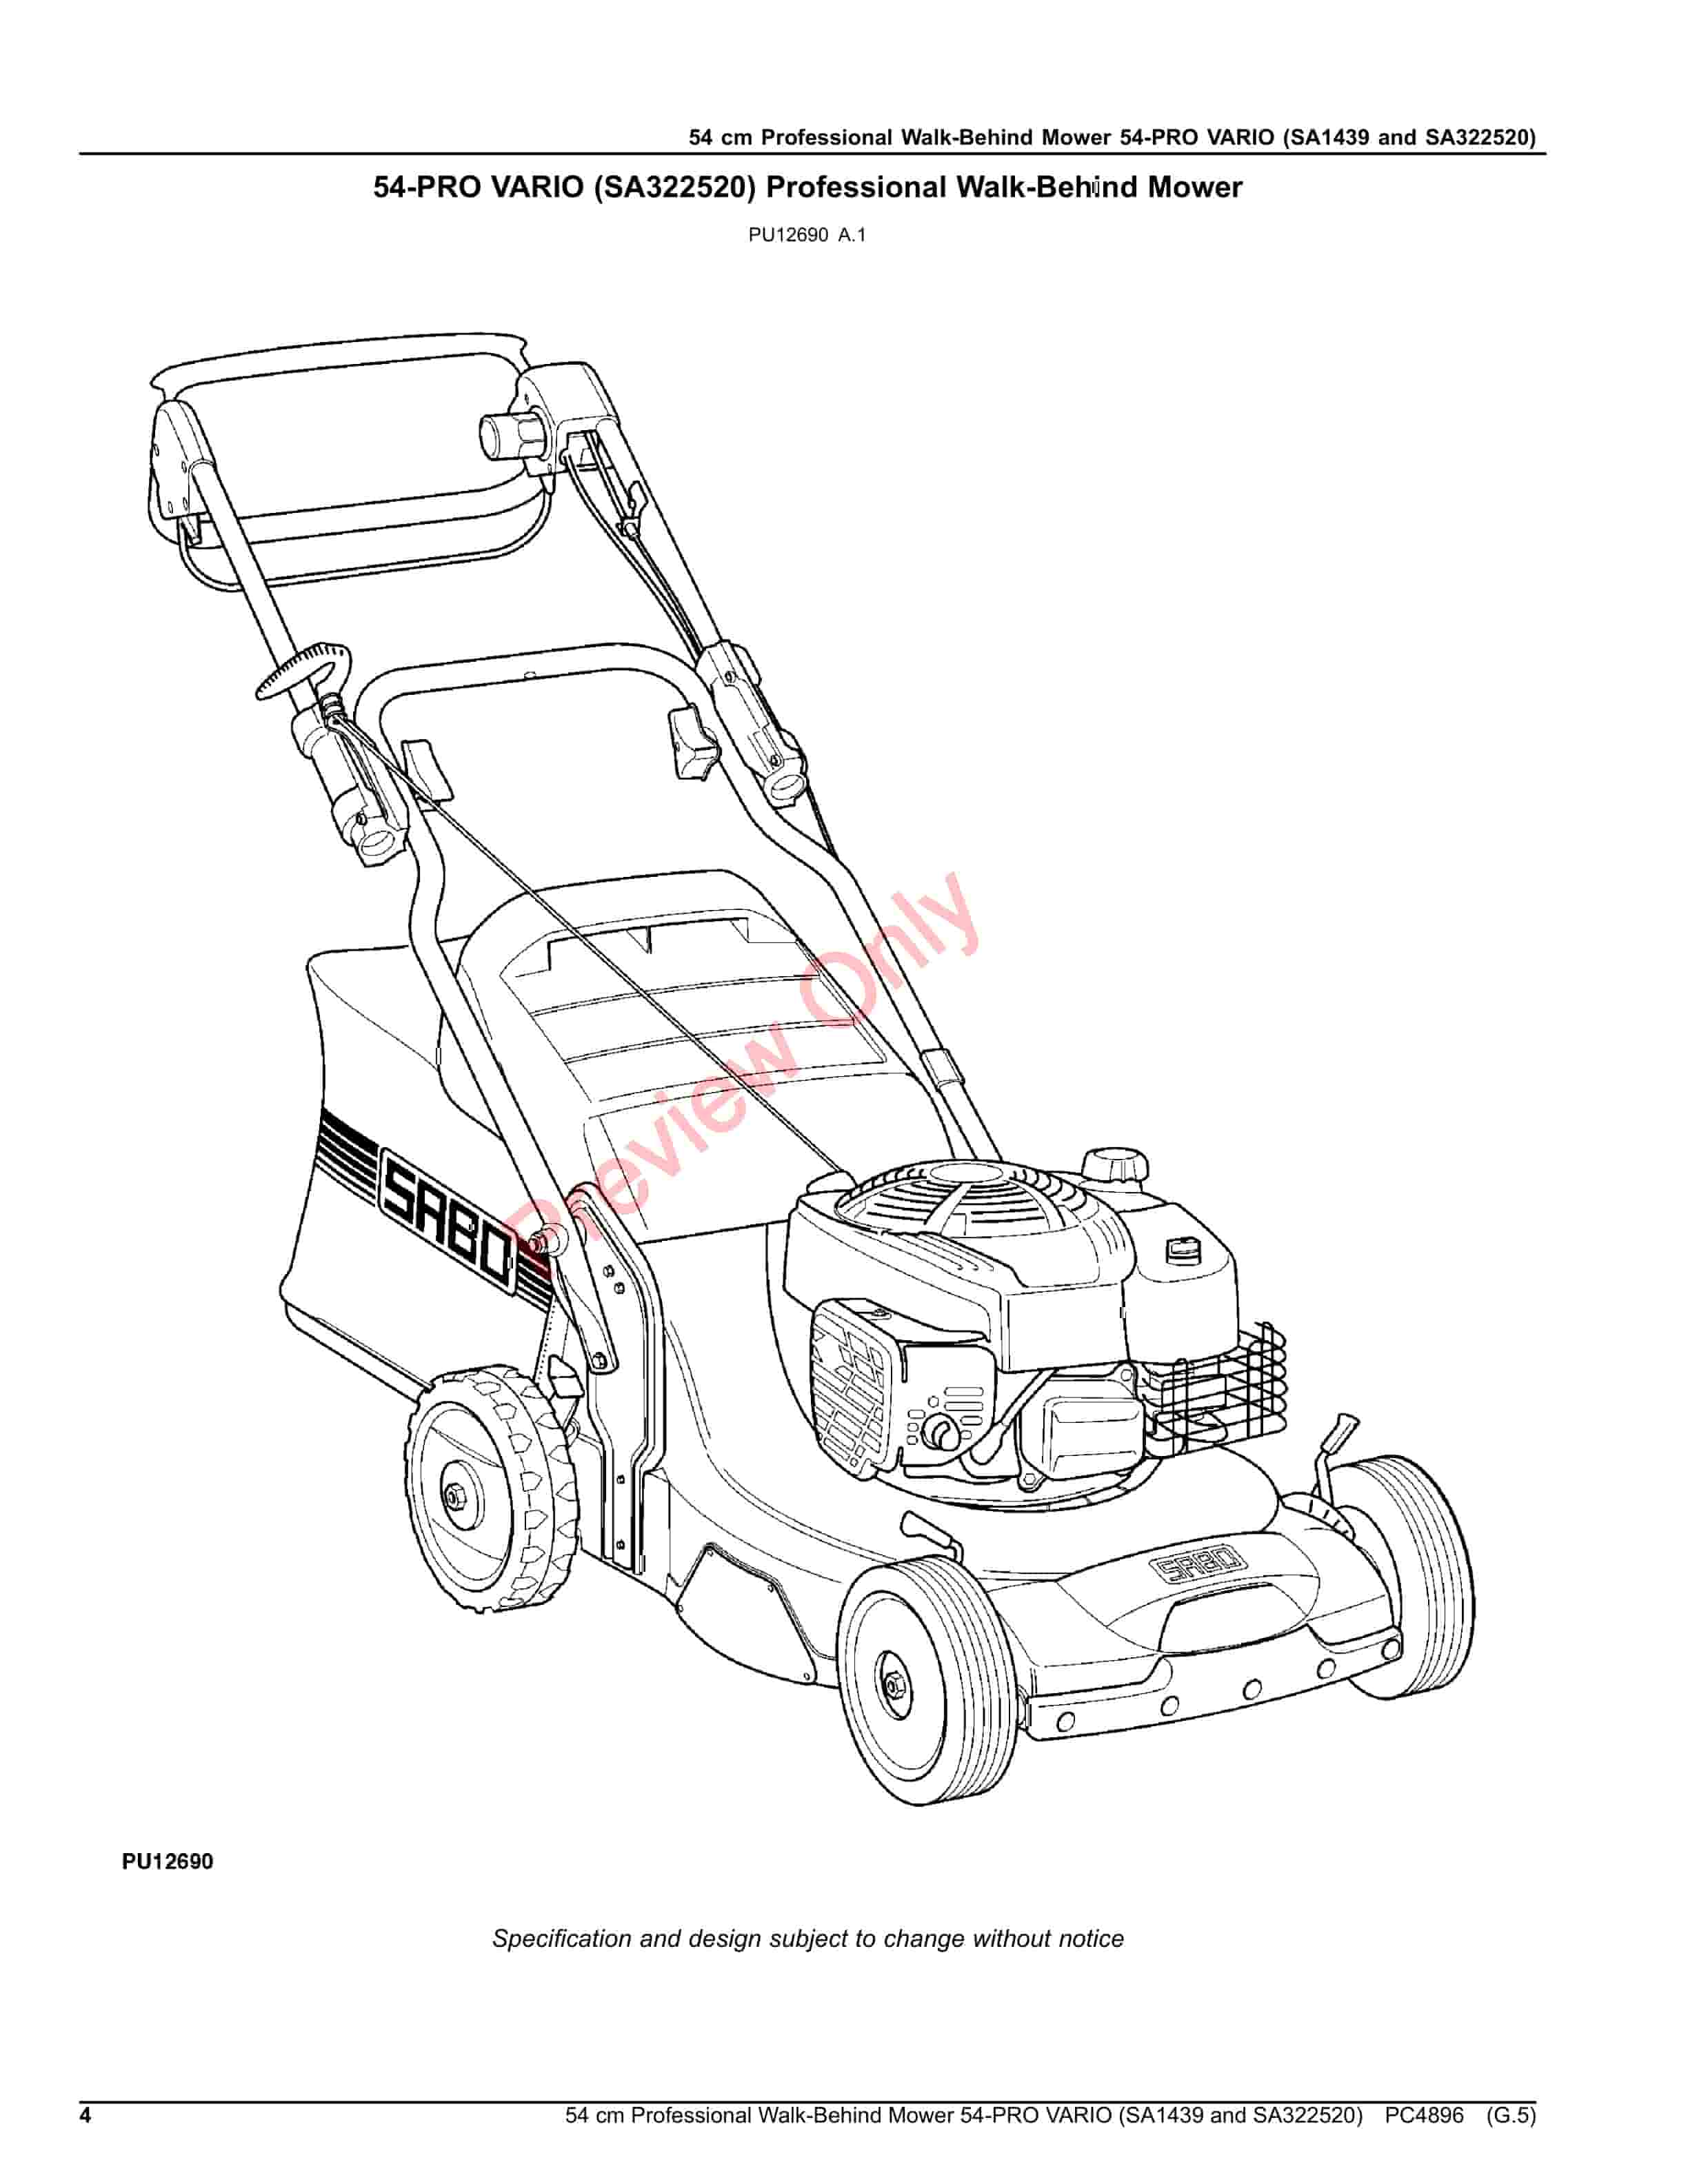 John Deere 54 cm Professional Walk-Behind Mower 54 Parts Catalog PC4896 16OCT20-4